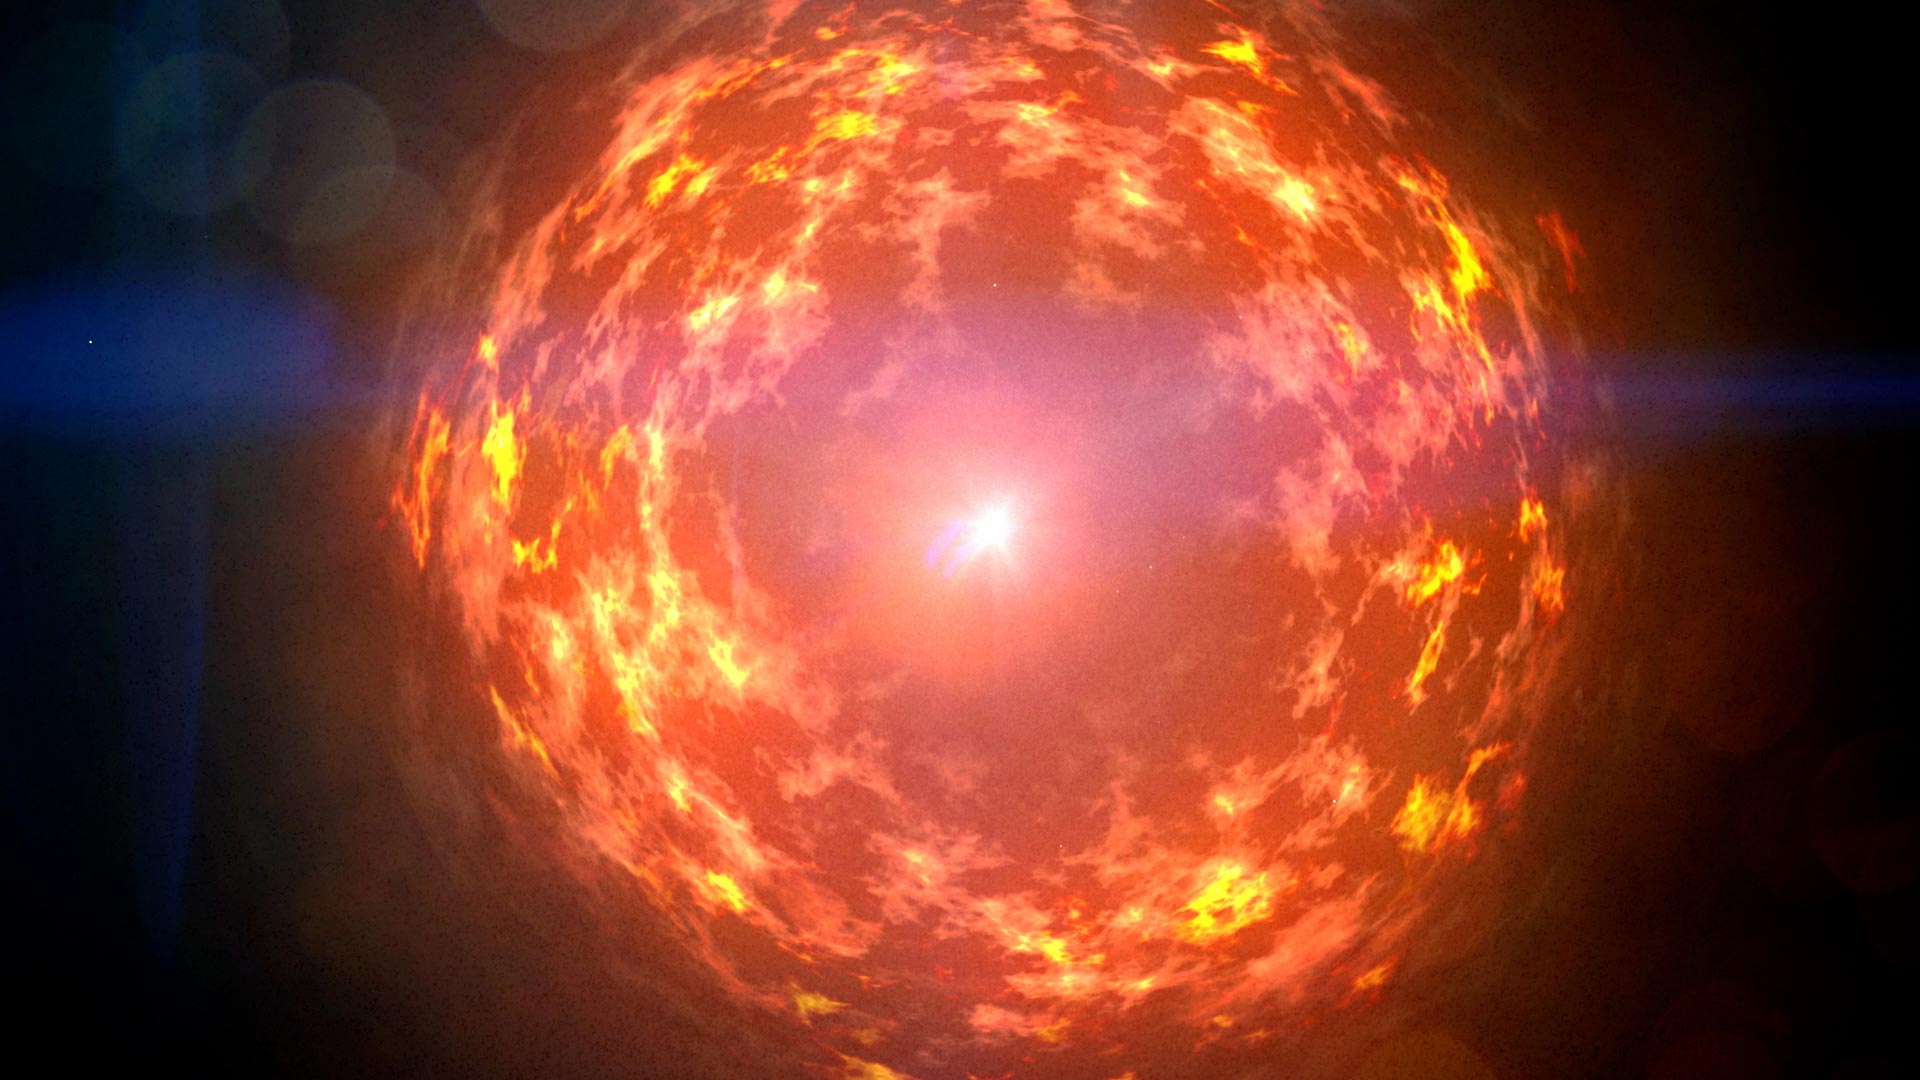 Fermi de la NASA no ve ningún rayo gamma de la supernova cercana